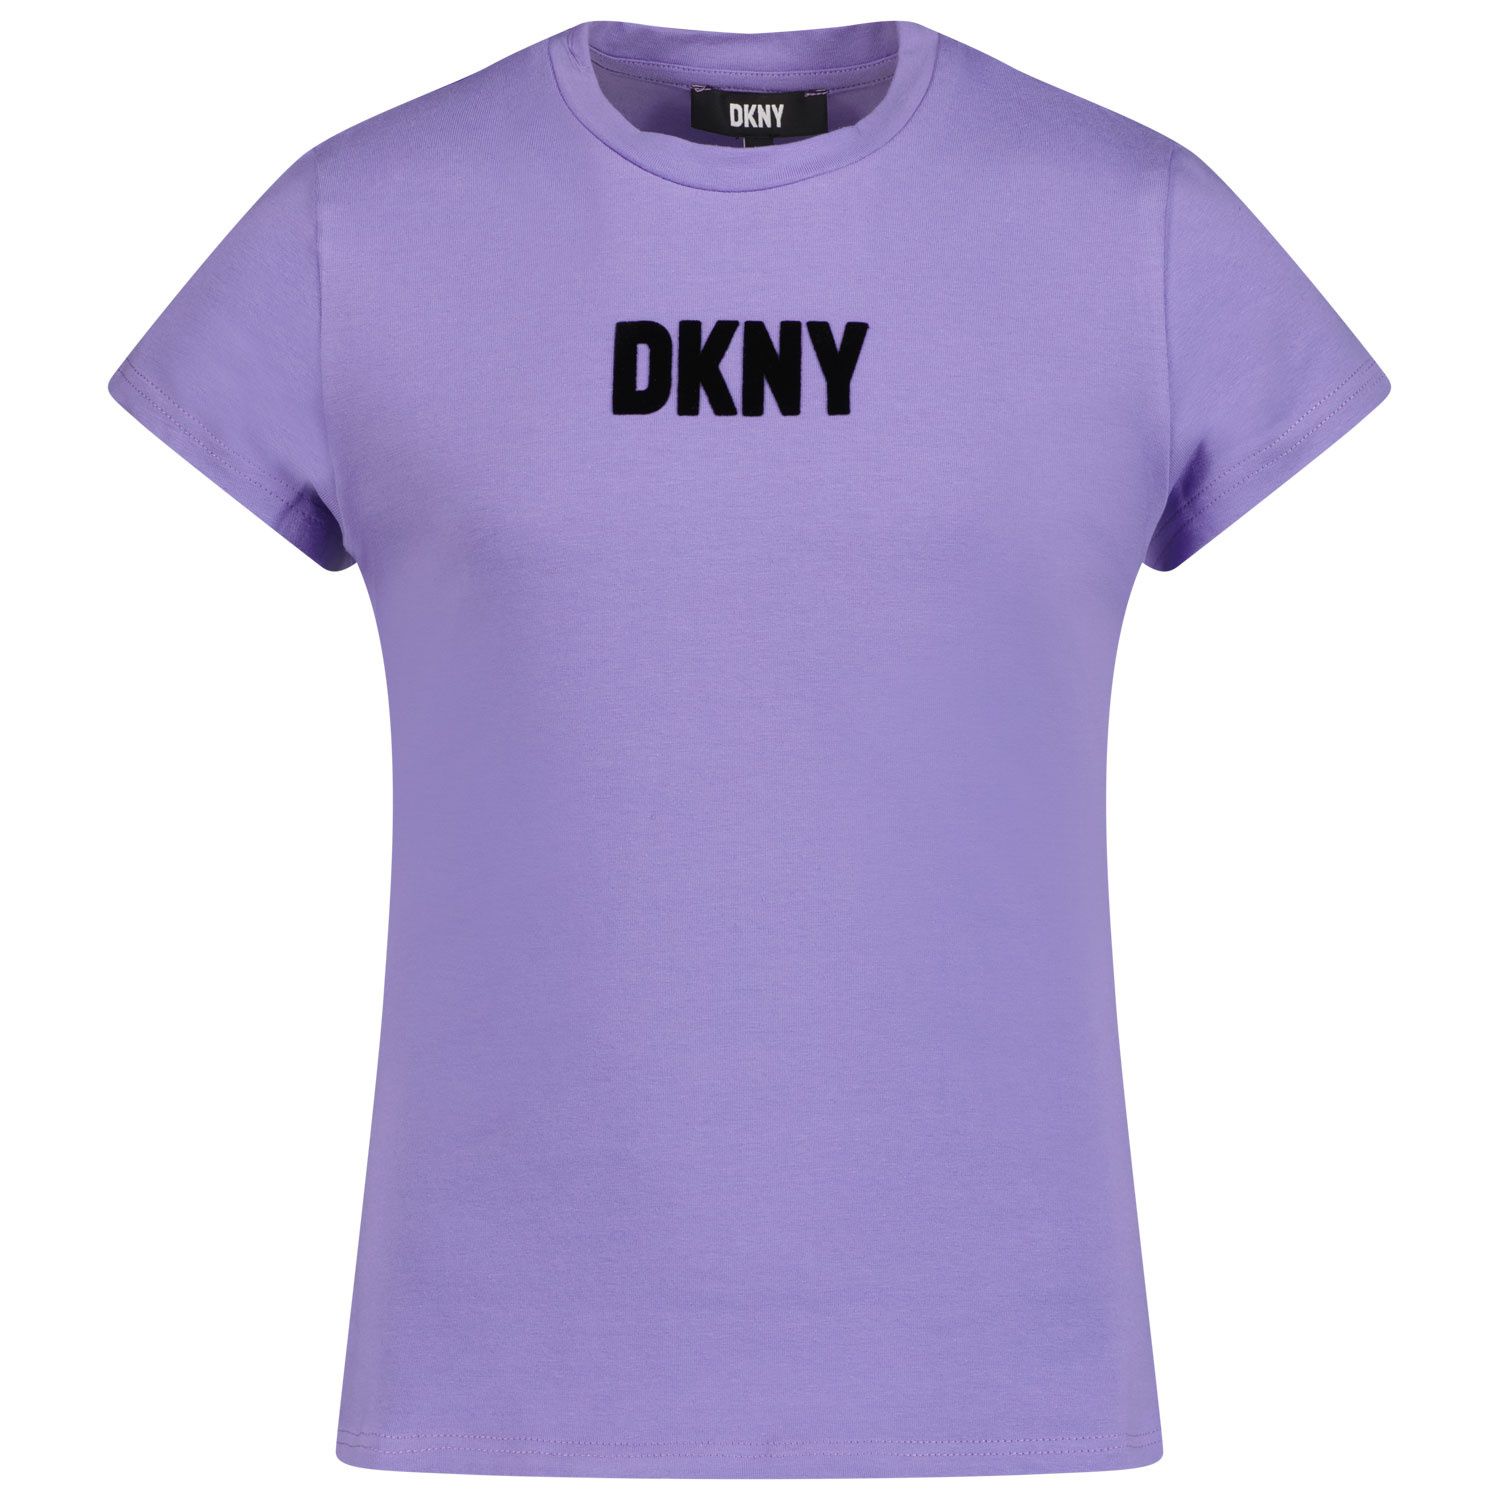 Afbeelding van DKNY D35S29 kinder t-shirt paars